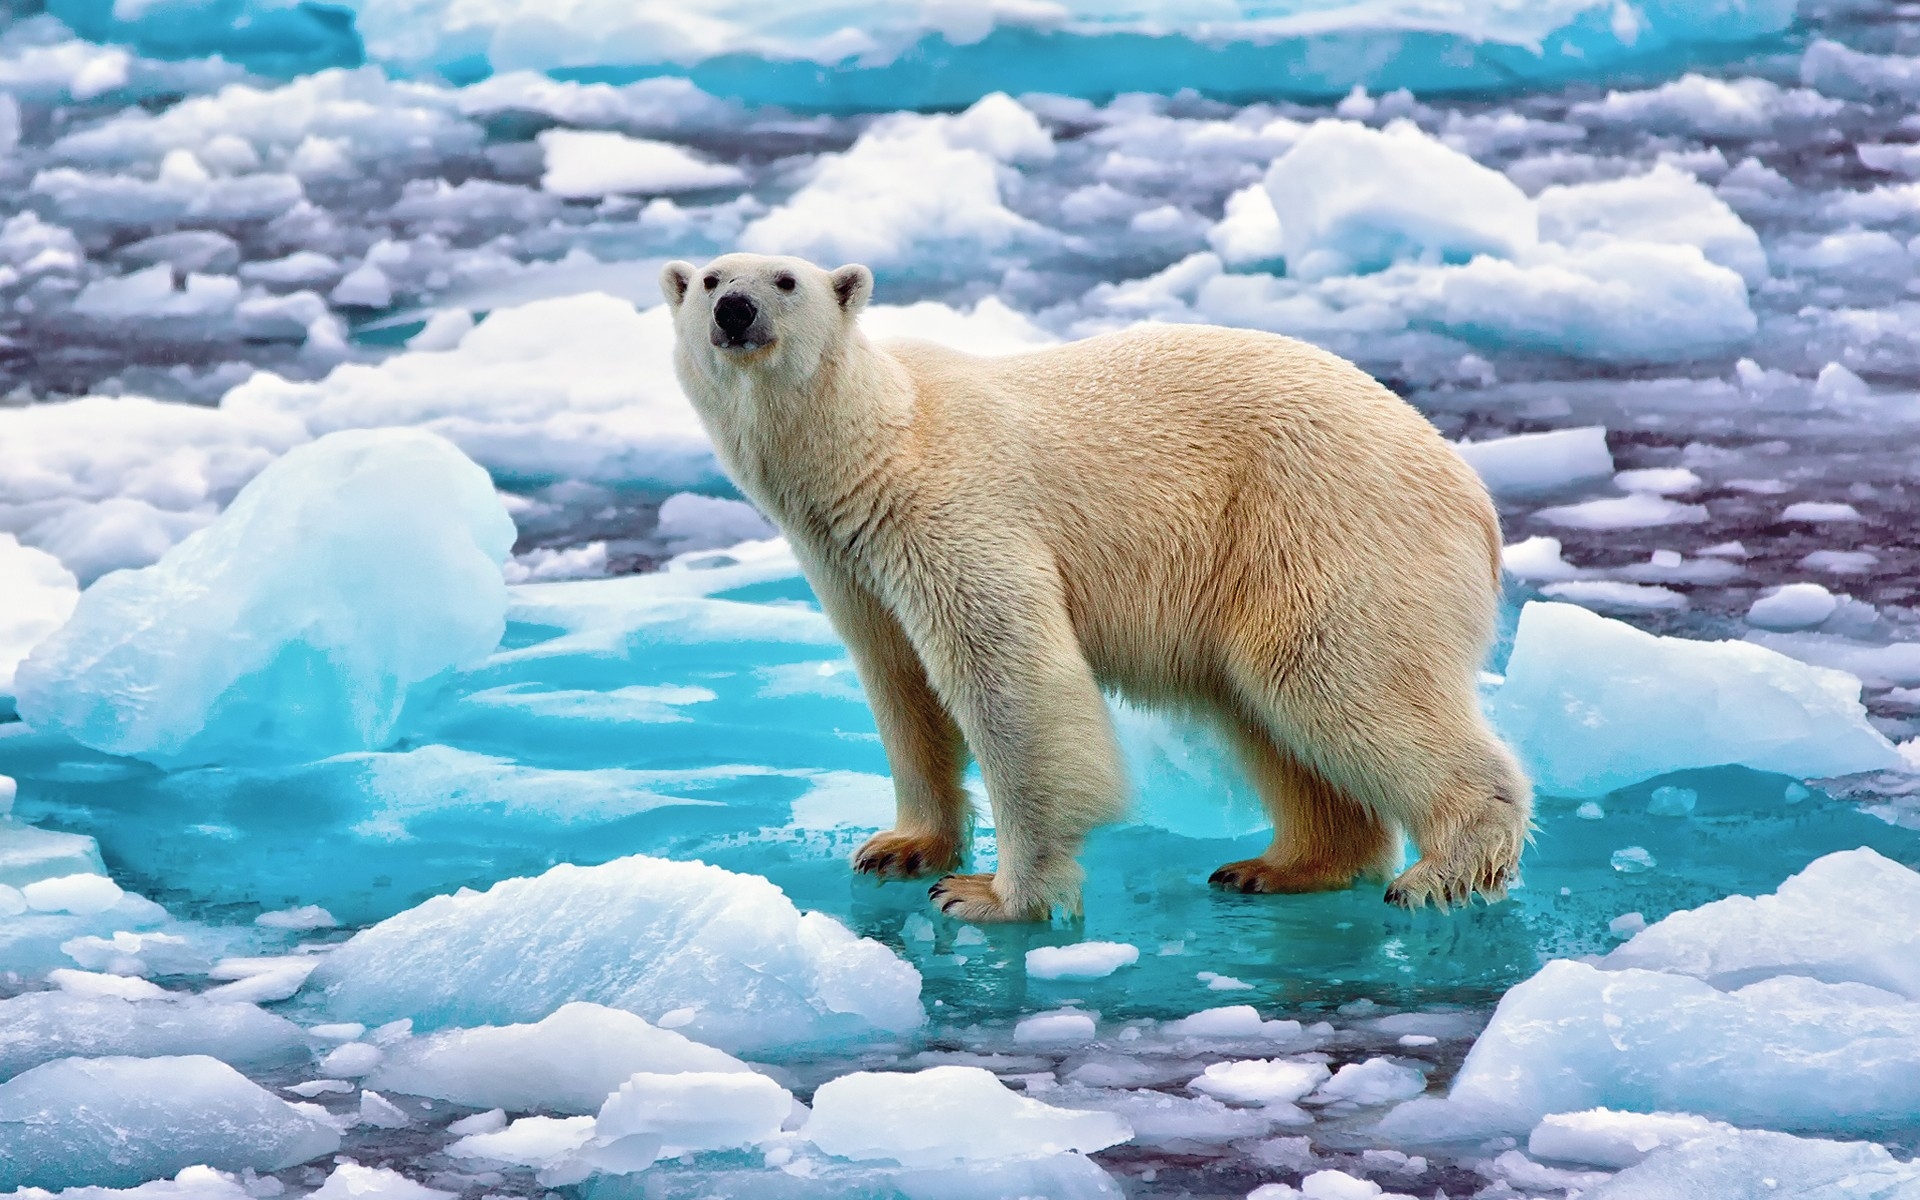 Lexica - pixel art polar bear standing on top of iceberg